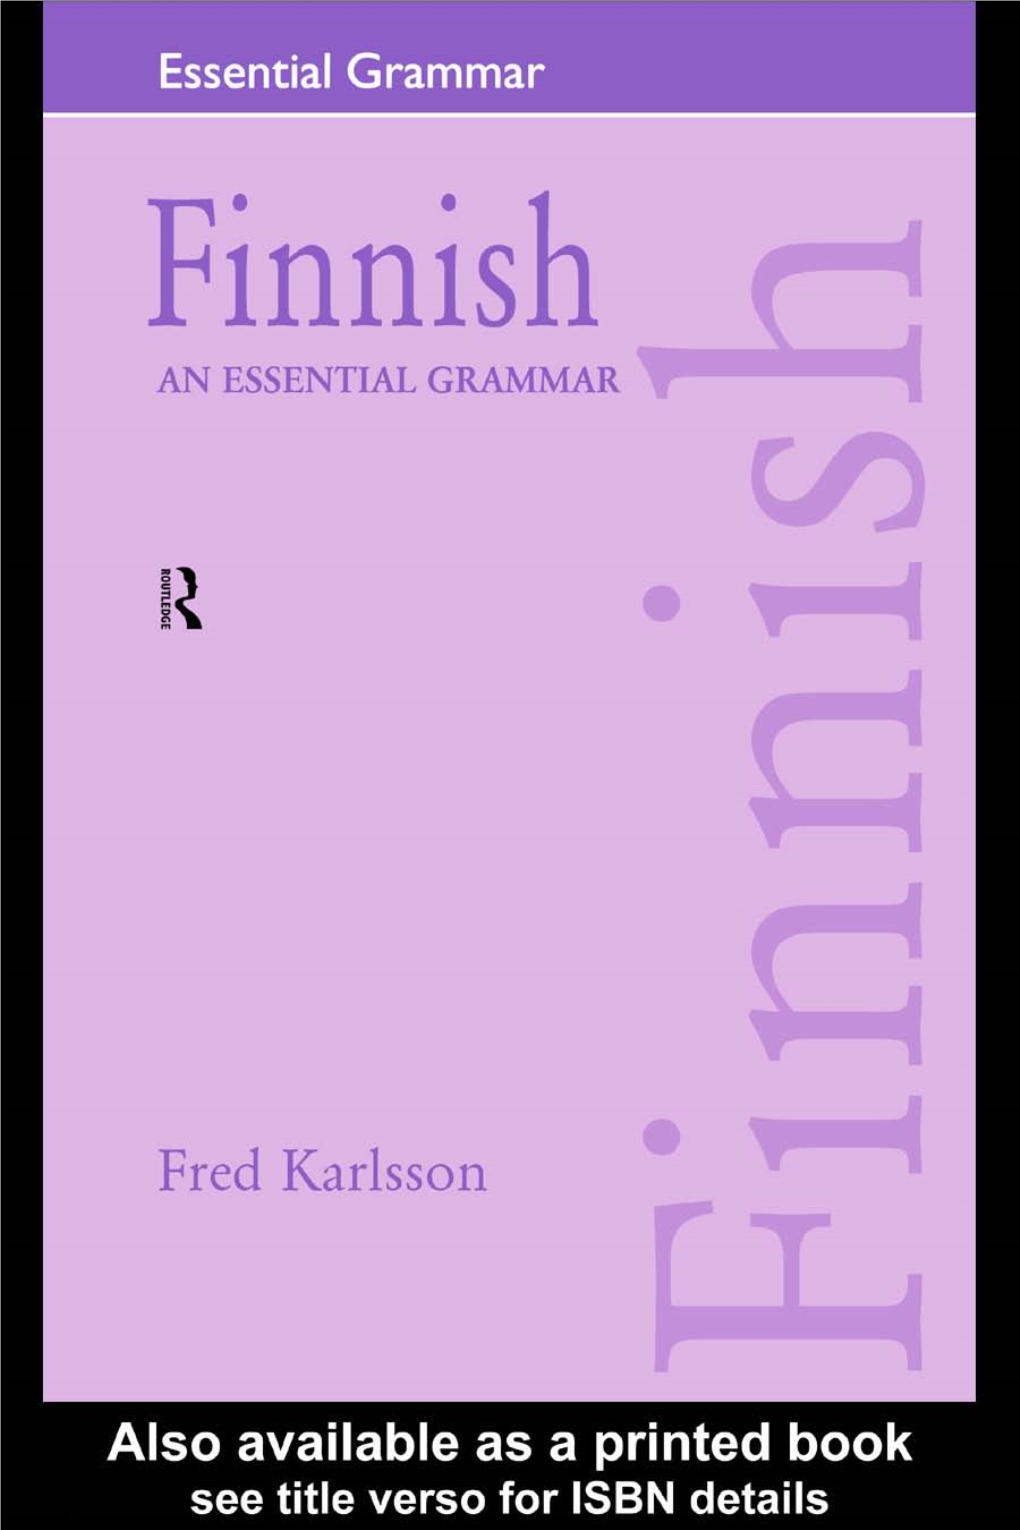 Finnish: an Essential Grammar